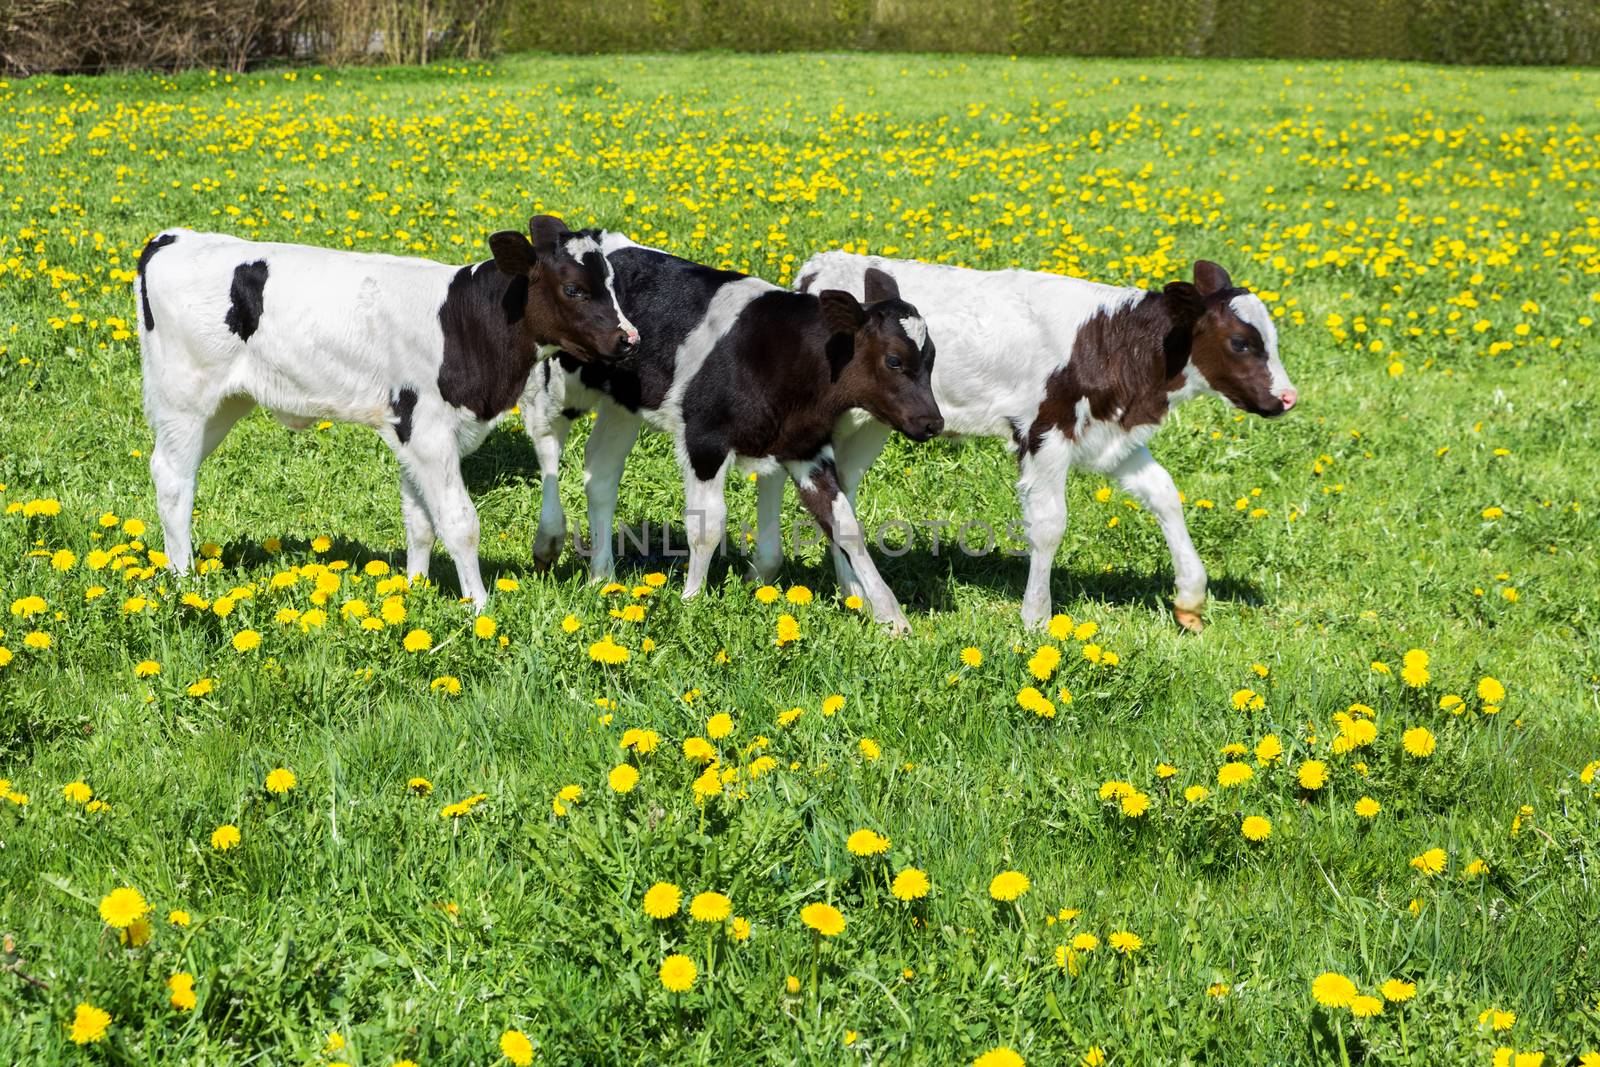 Three black white calves walk in green grass with dandelions